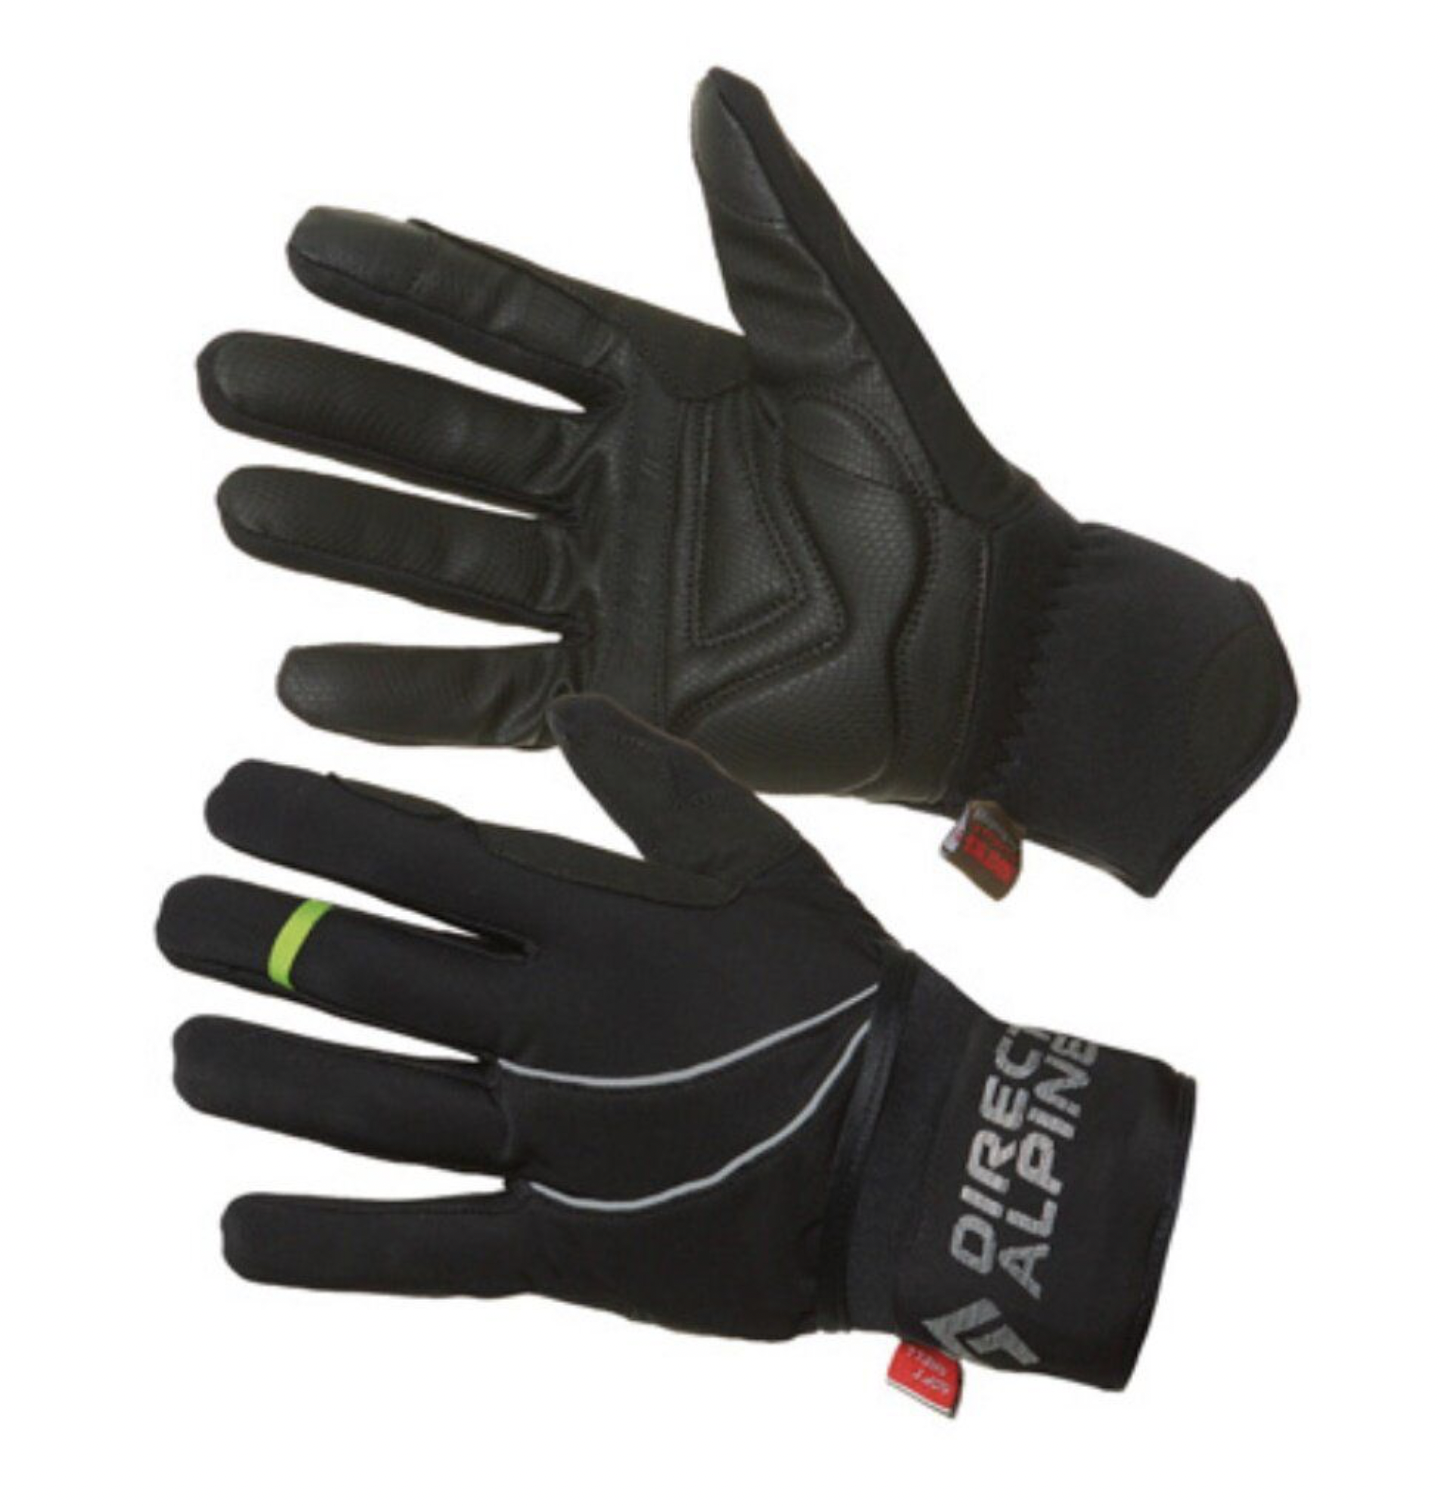 Directalpine Gloves Express Plus